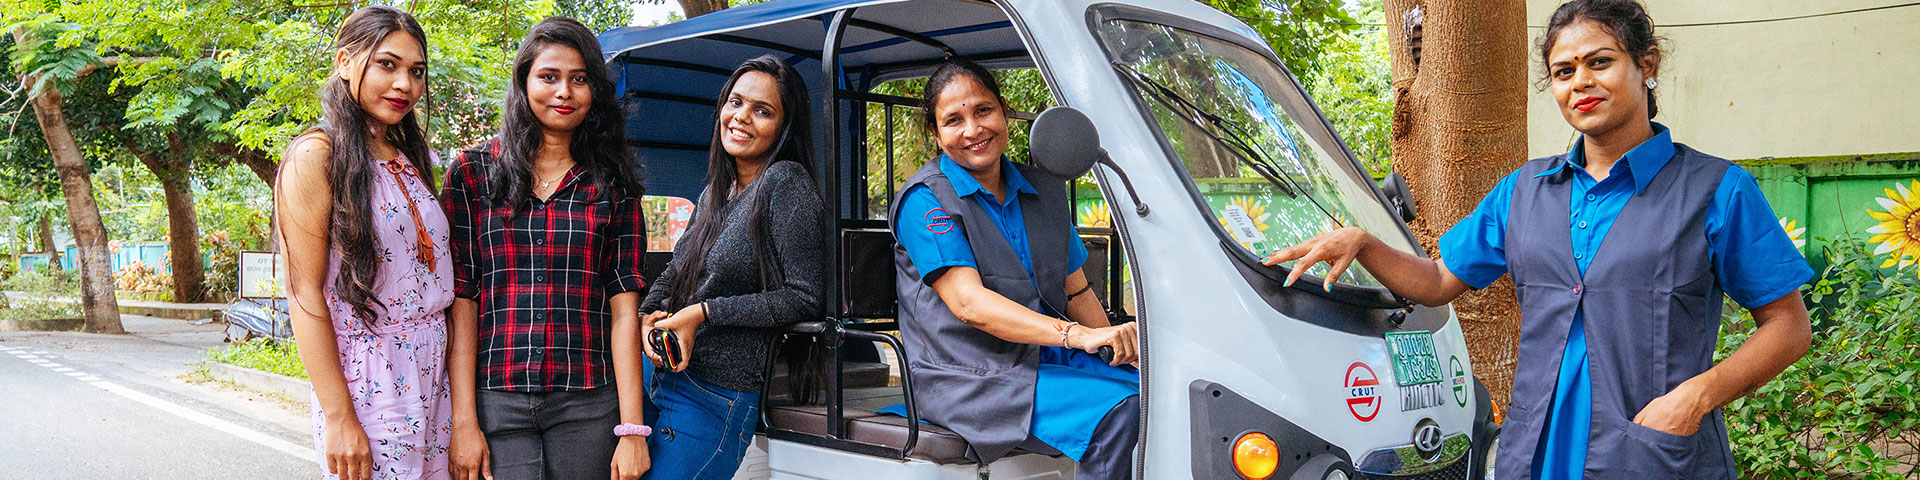 Mo E-ride electric autorickshaws driven by women and transgender drivers.